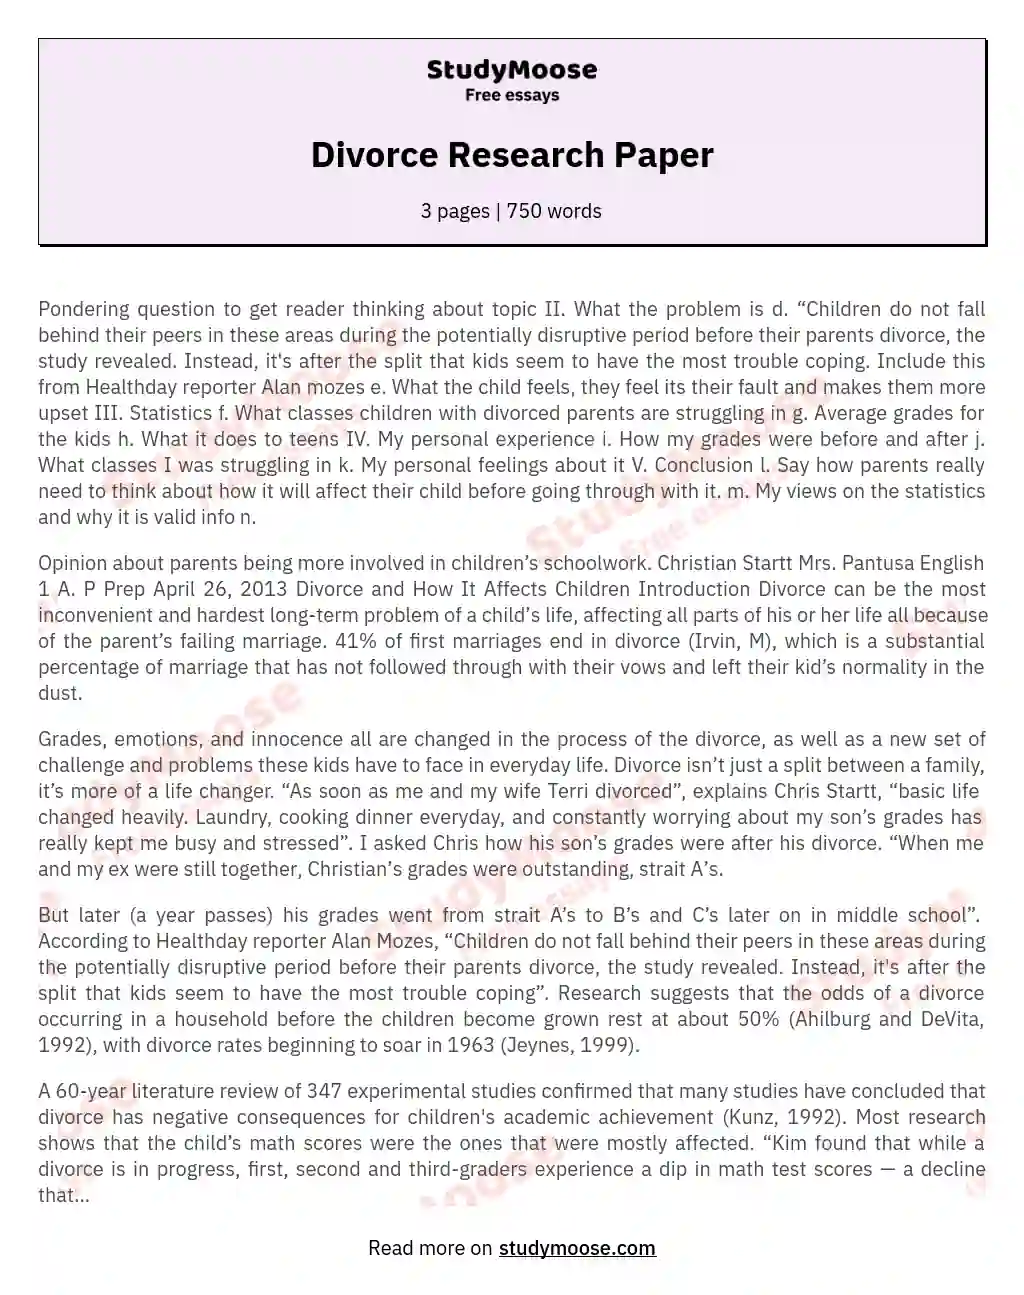 essay titles about divorce